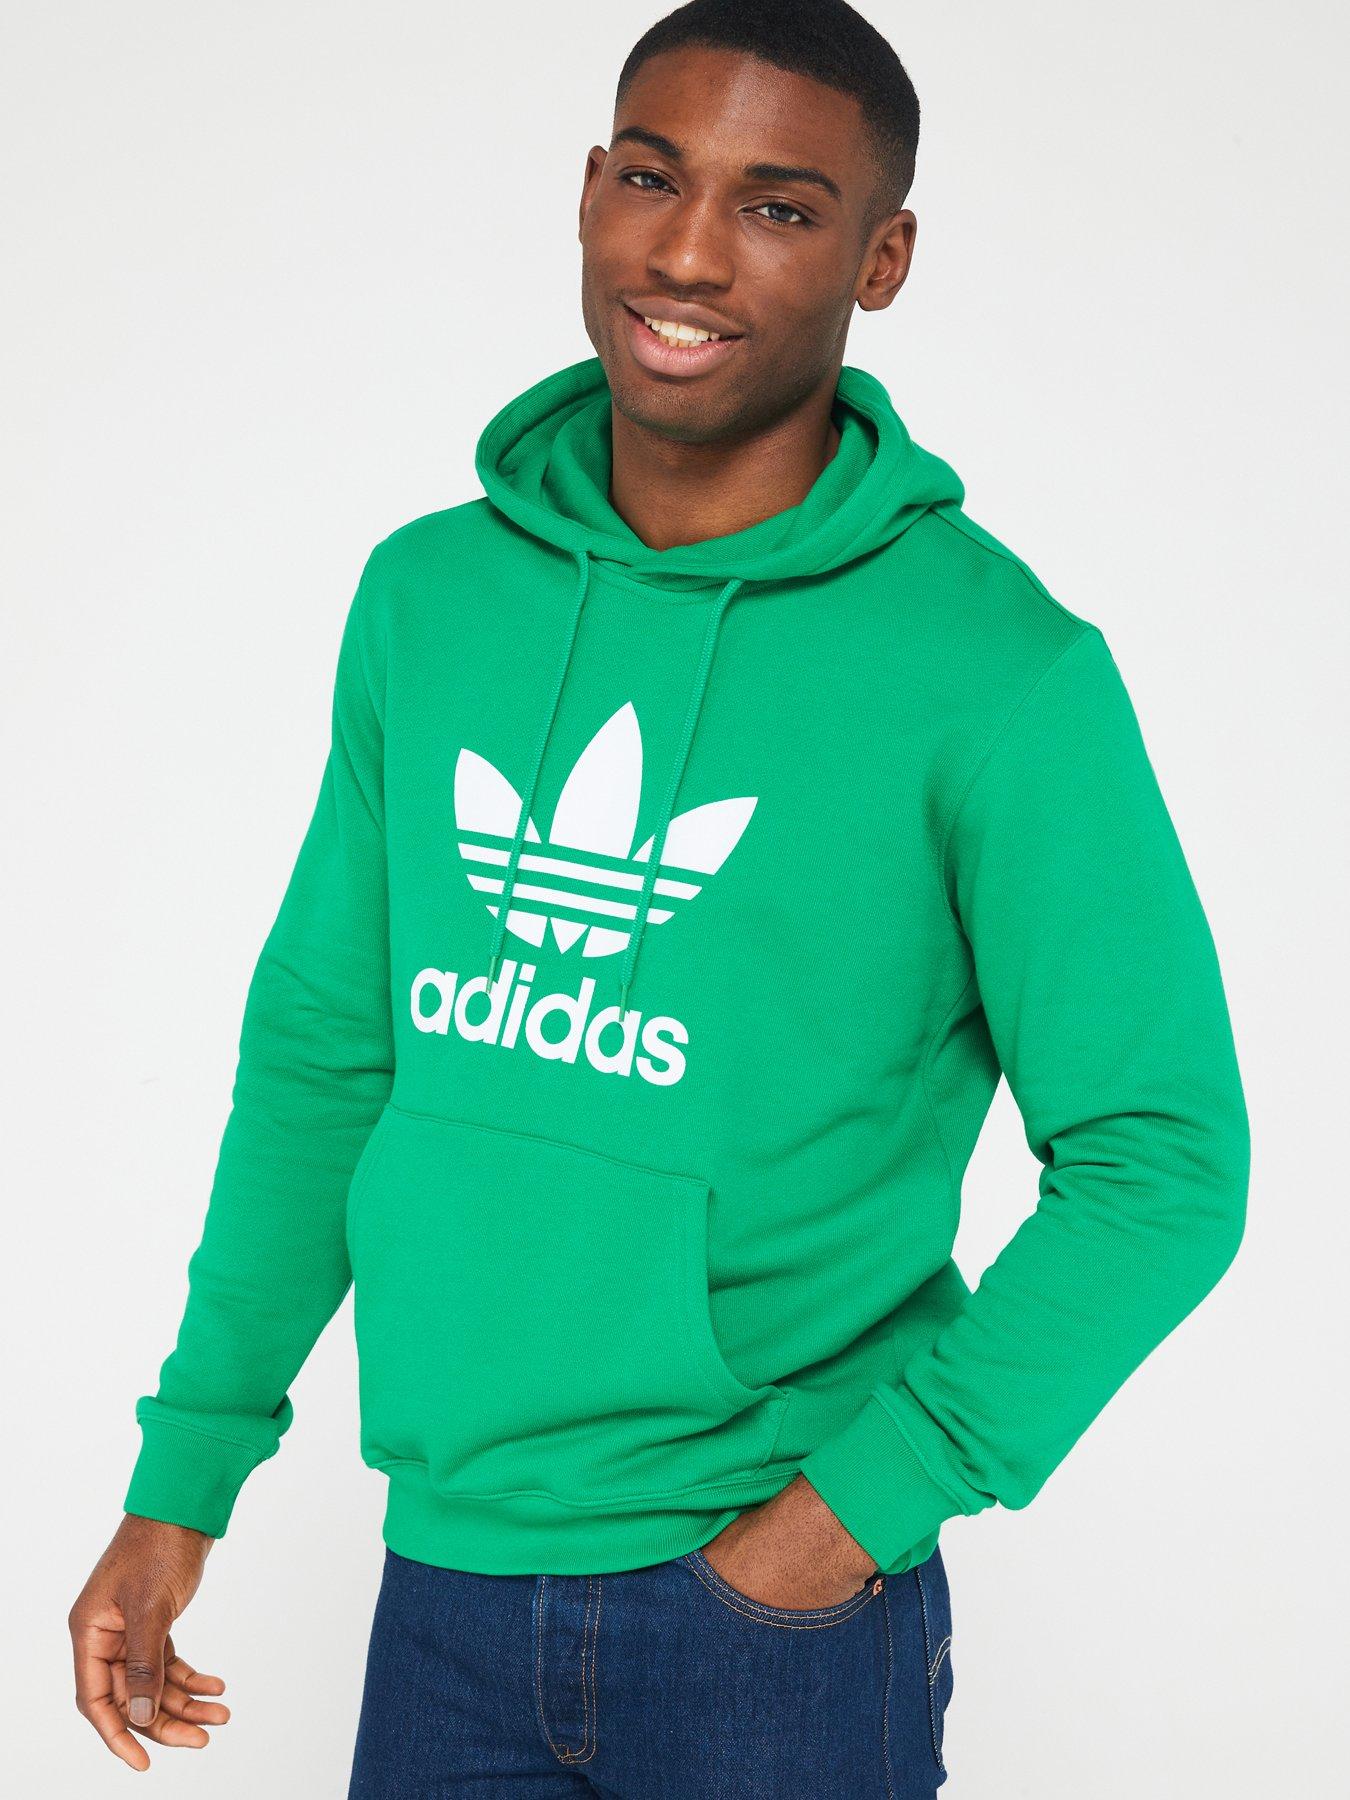 Hoodies & sweatshirts | Adidas originals | Very Men Ireland 